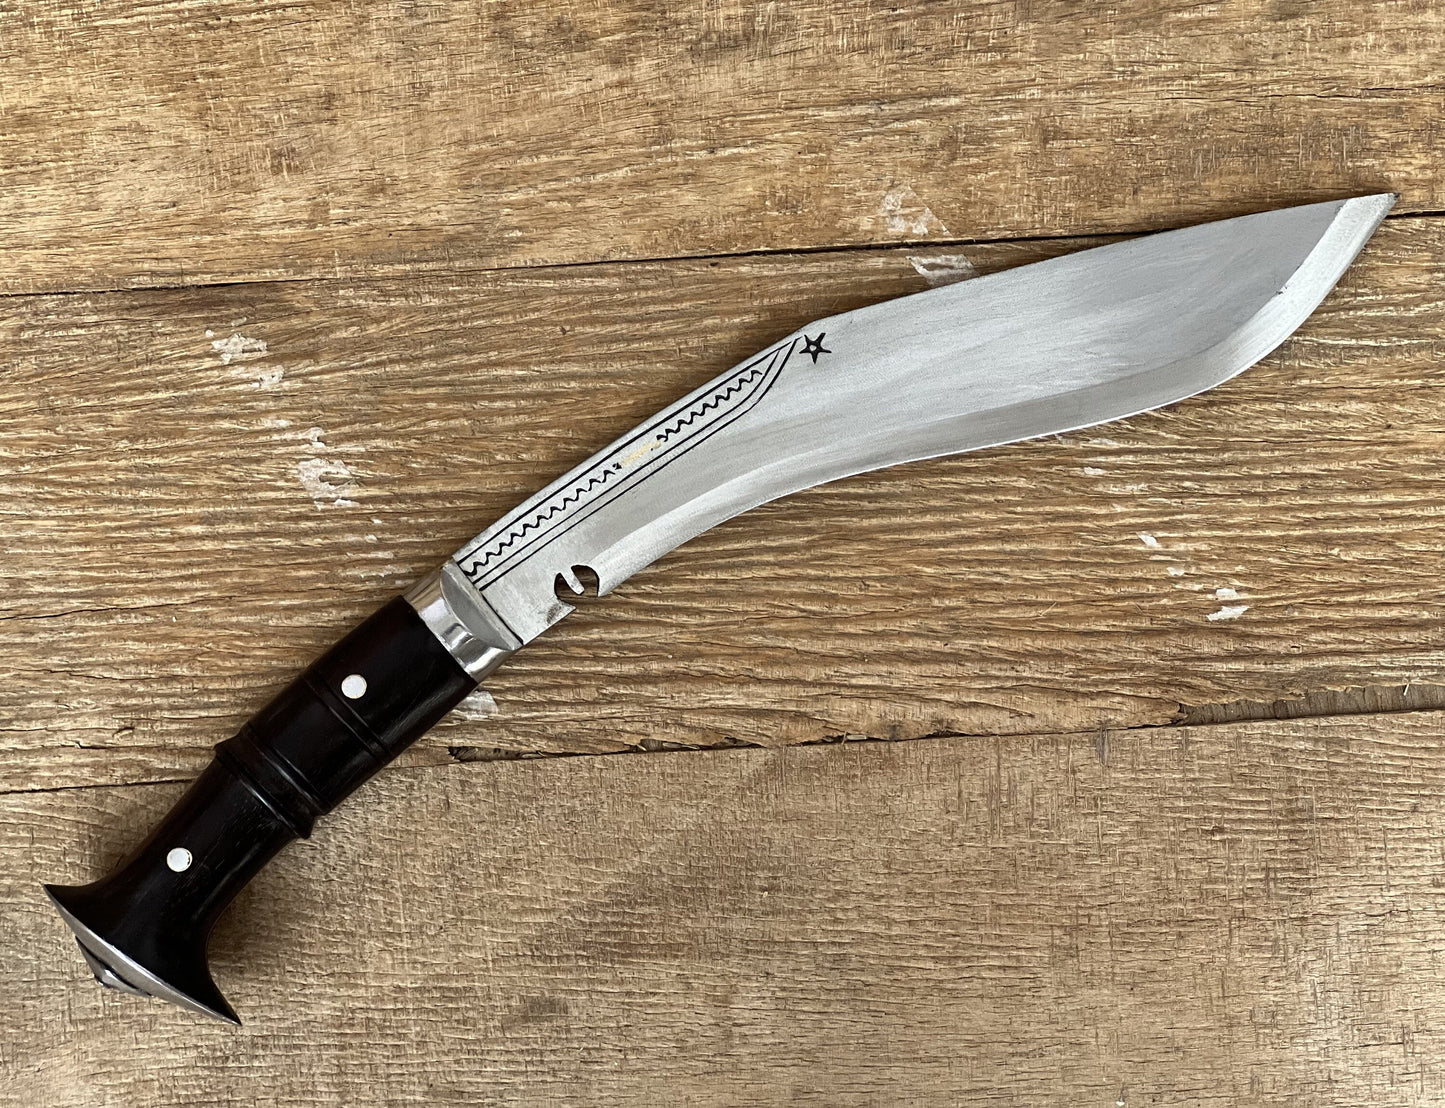 Gorkha Nepal Hand-forged SIRUPATE Panawal Khukuri Khukri Kukri Knife 10-Inch Blade Full Tang Wooden Handle